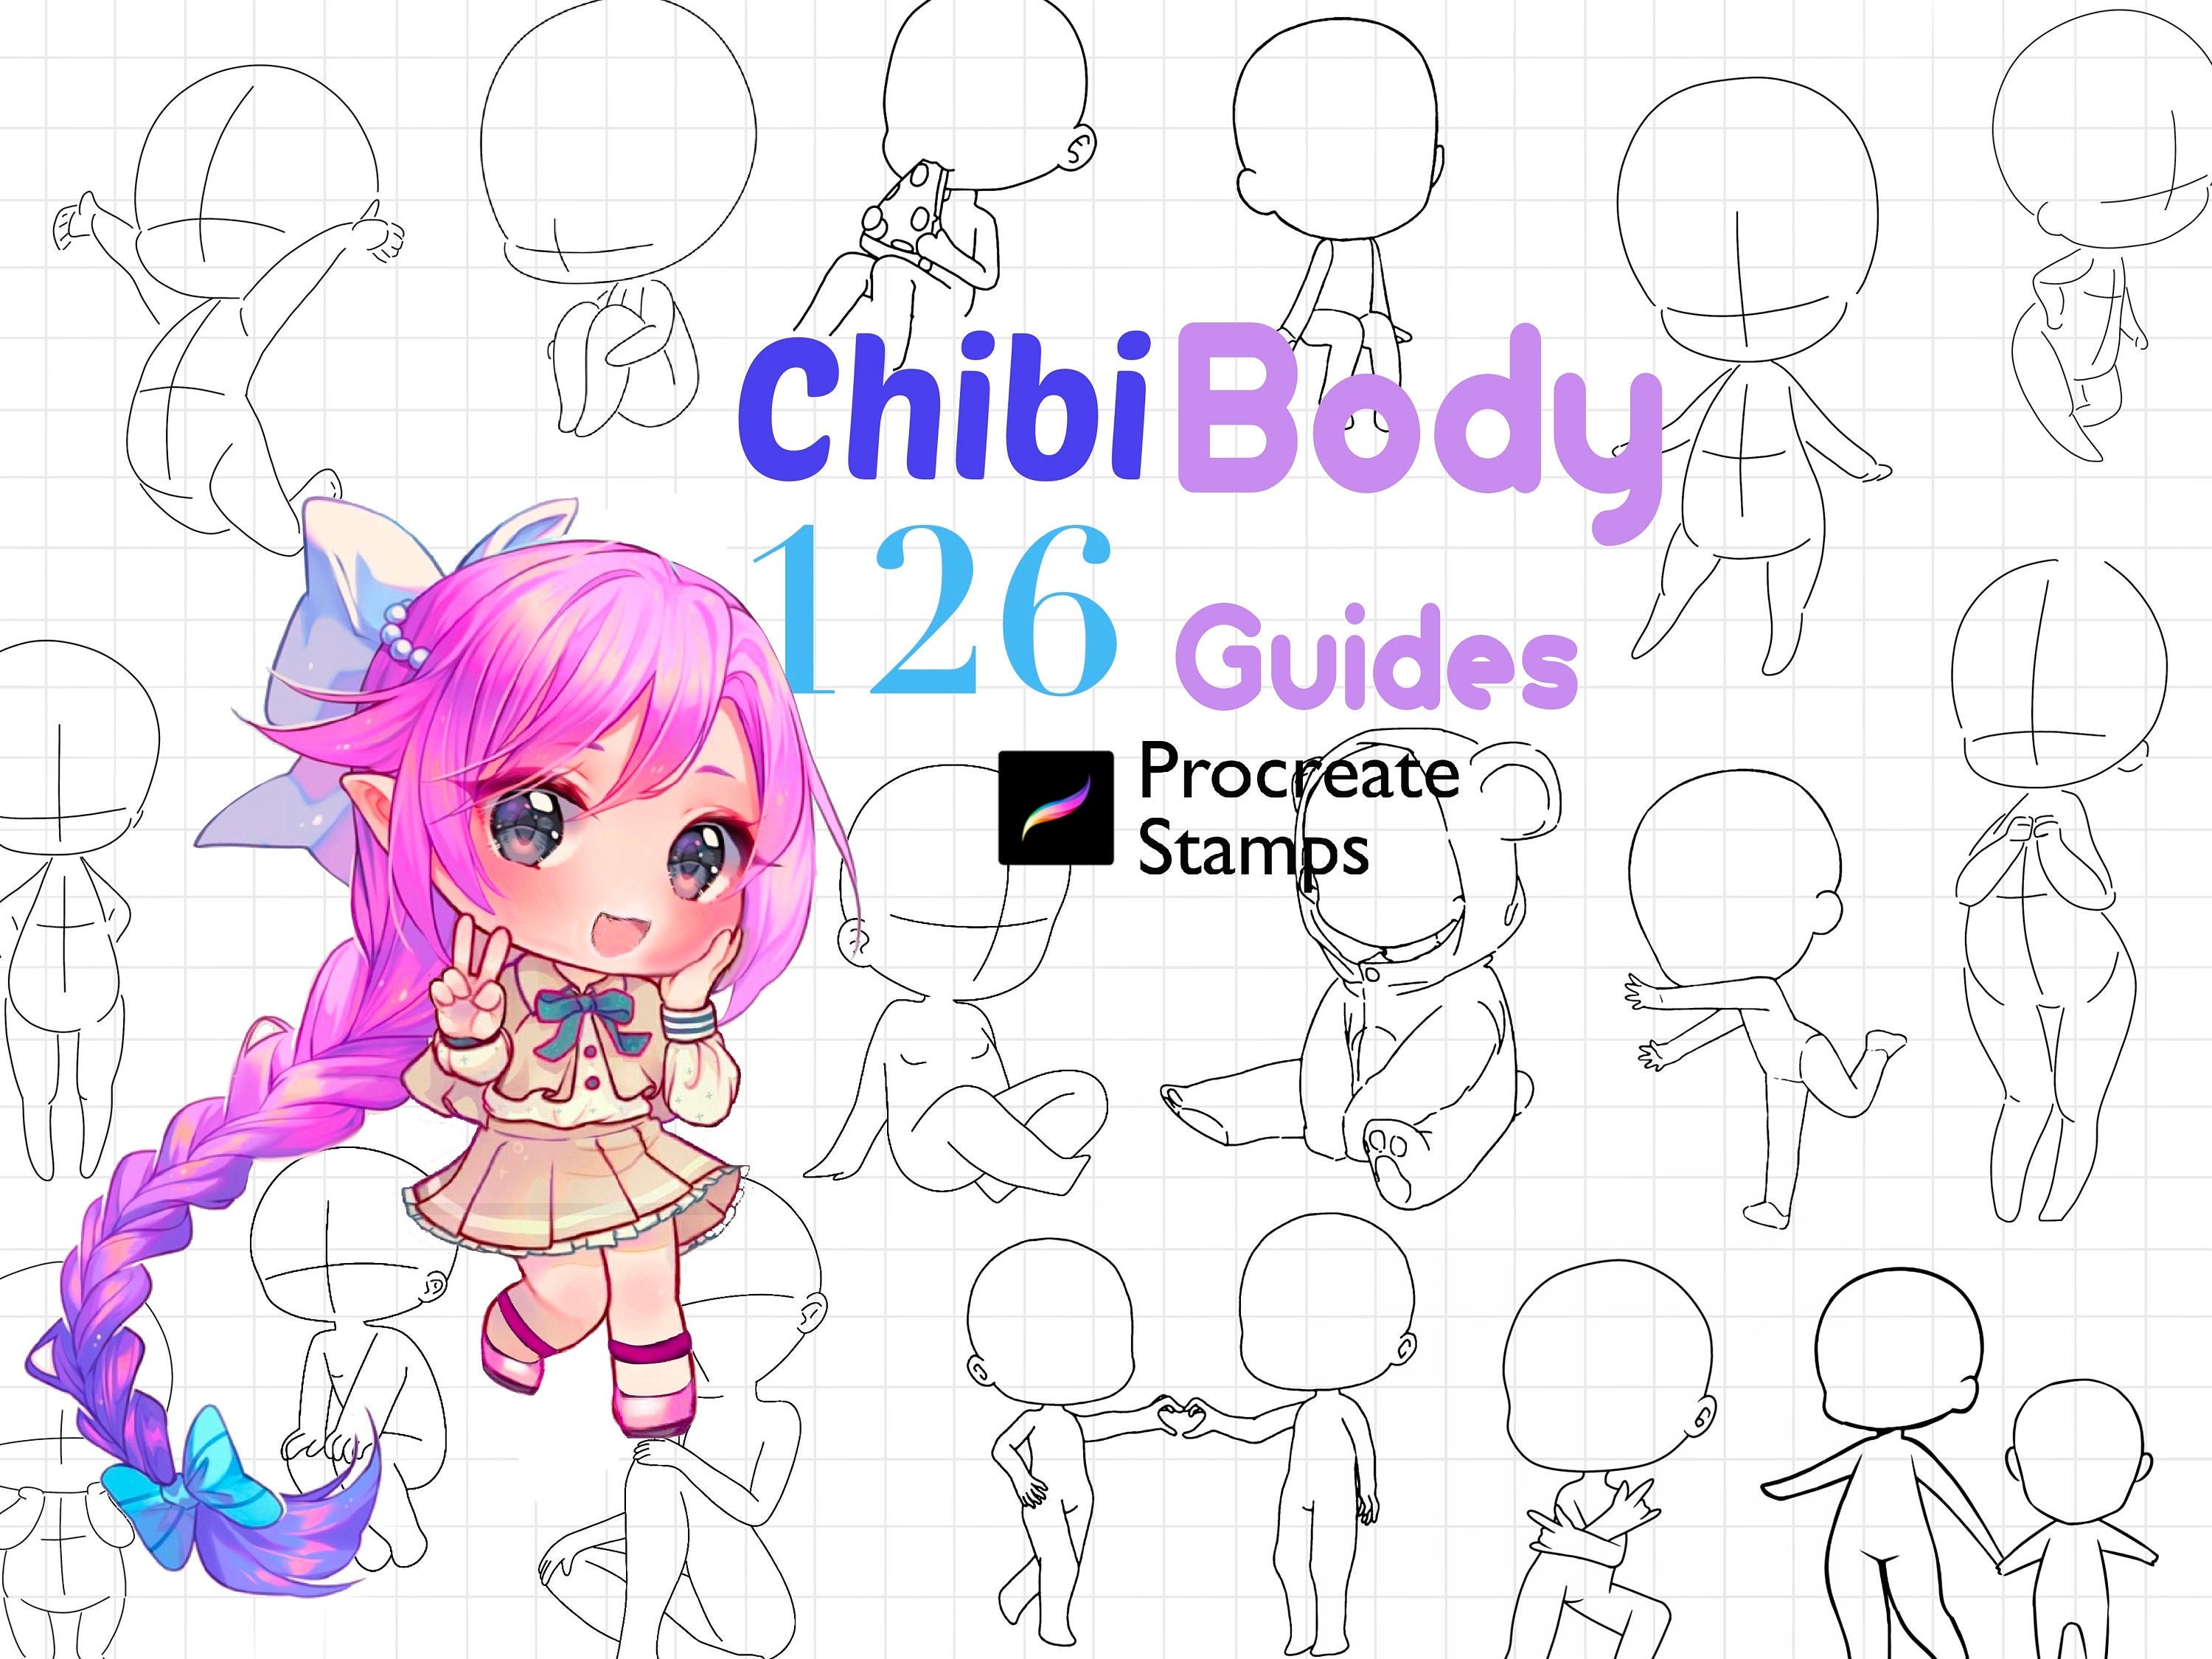 Procreate Chibi Base Chibi Pose Anime Chibi Stamp Guide Chibi Reference  Chibi Doll Procreate Pose Female Character Template P2U Base 